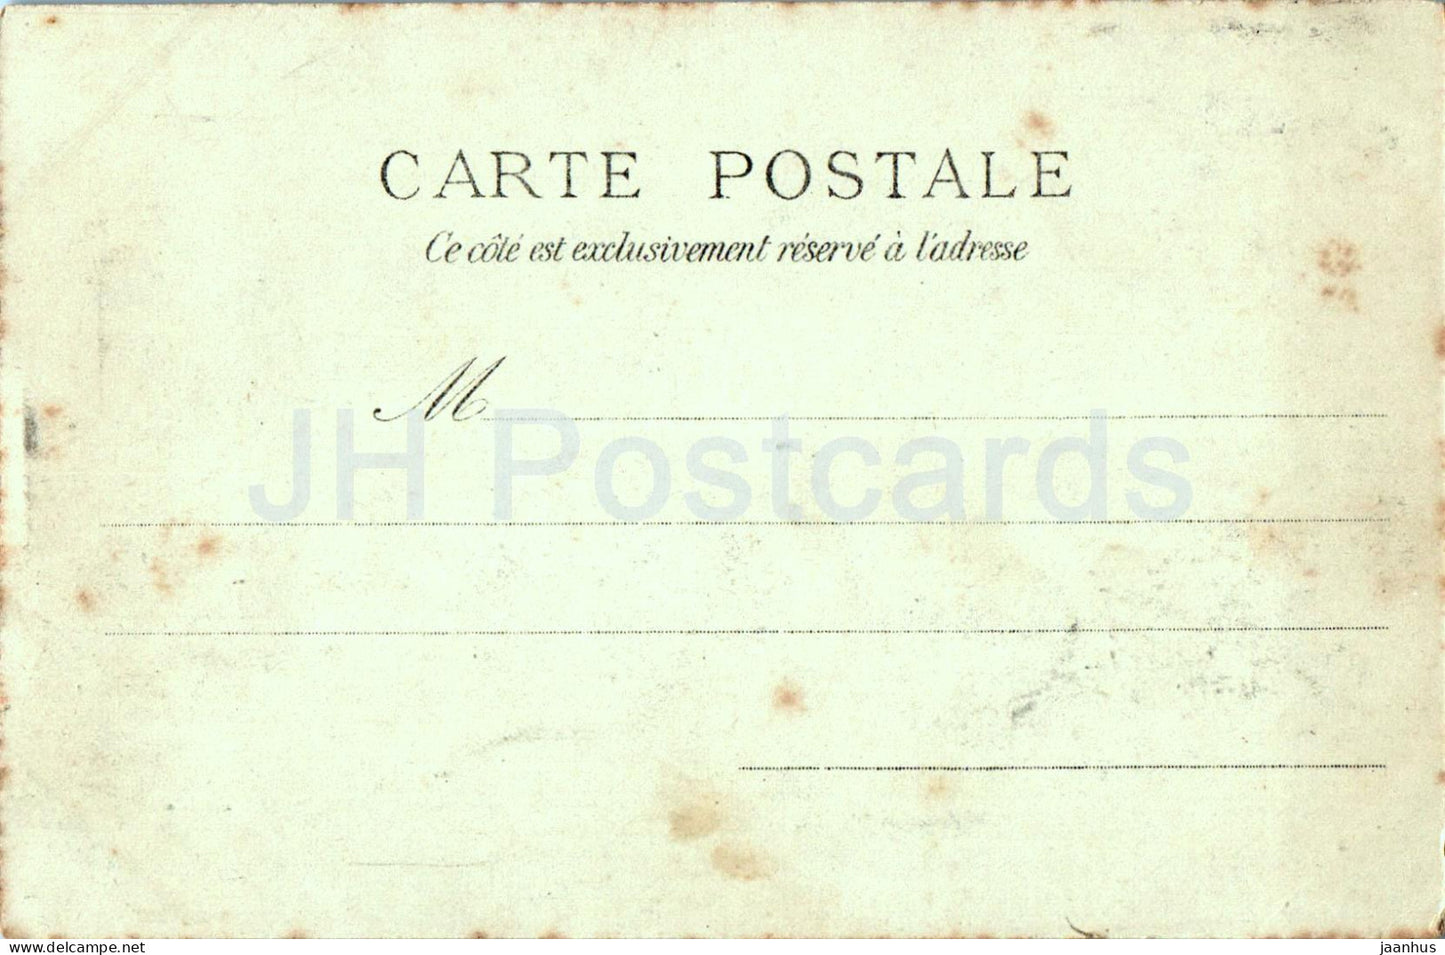 Houlgate - Pavillon du Grand Hotel d'Houlgate - 88 - alte Postkarte - Frankreich - unbenutzt 